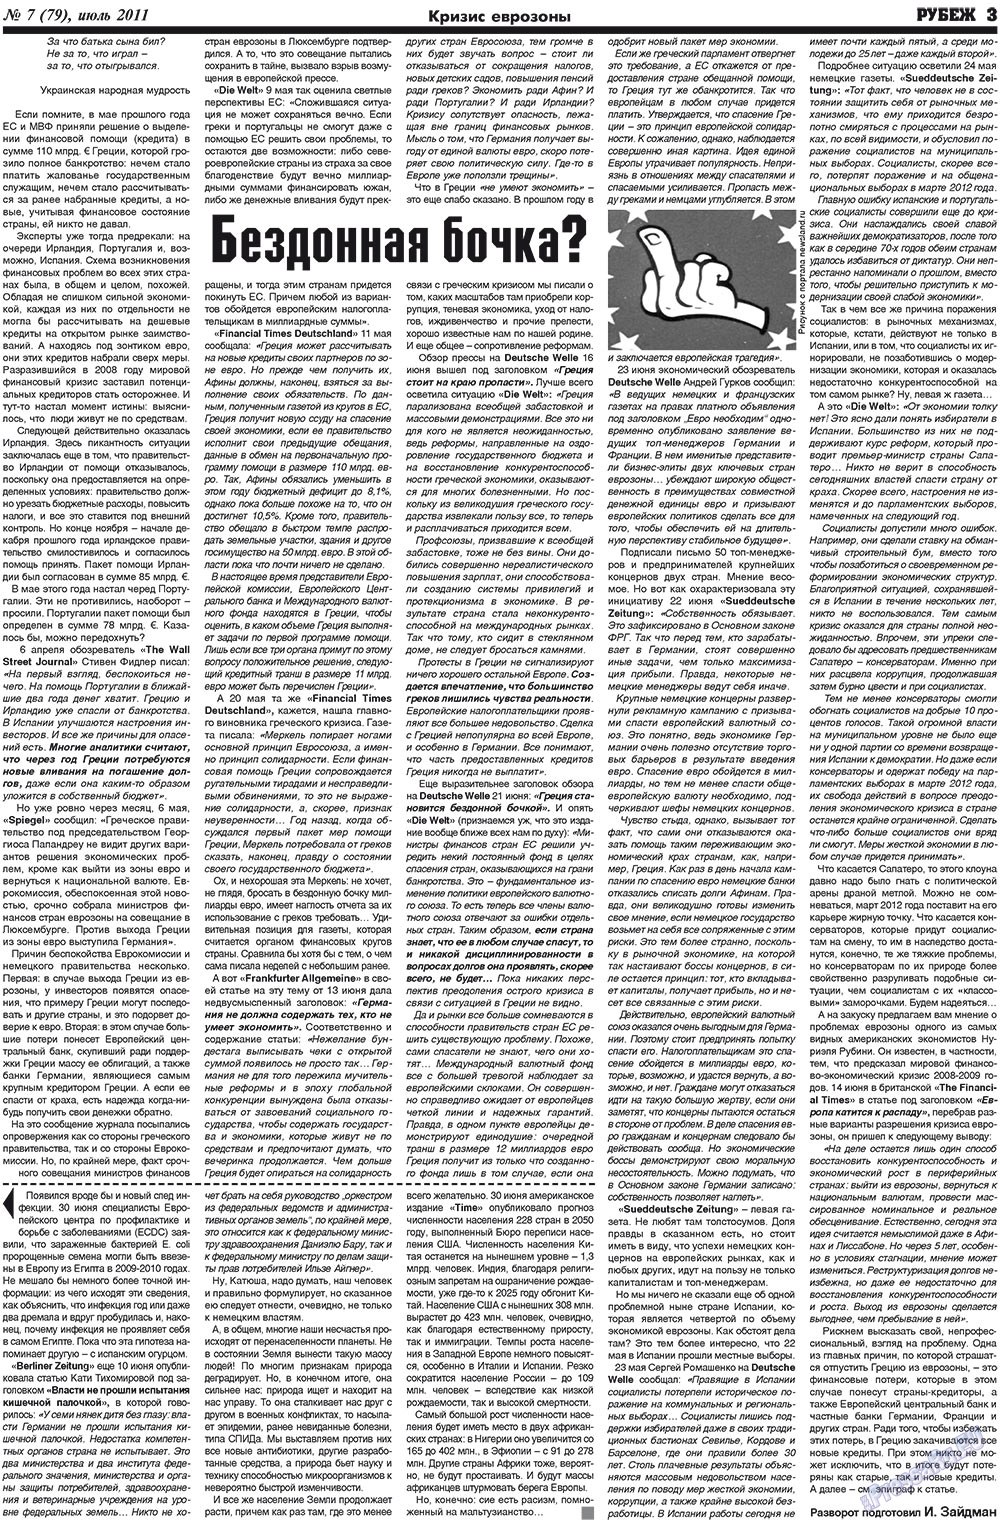 Рубеж, газета. 2011 №7 стр.3